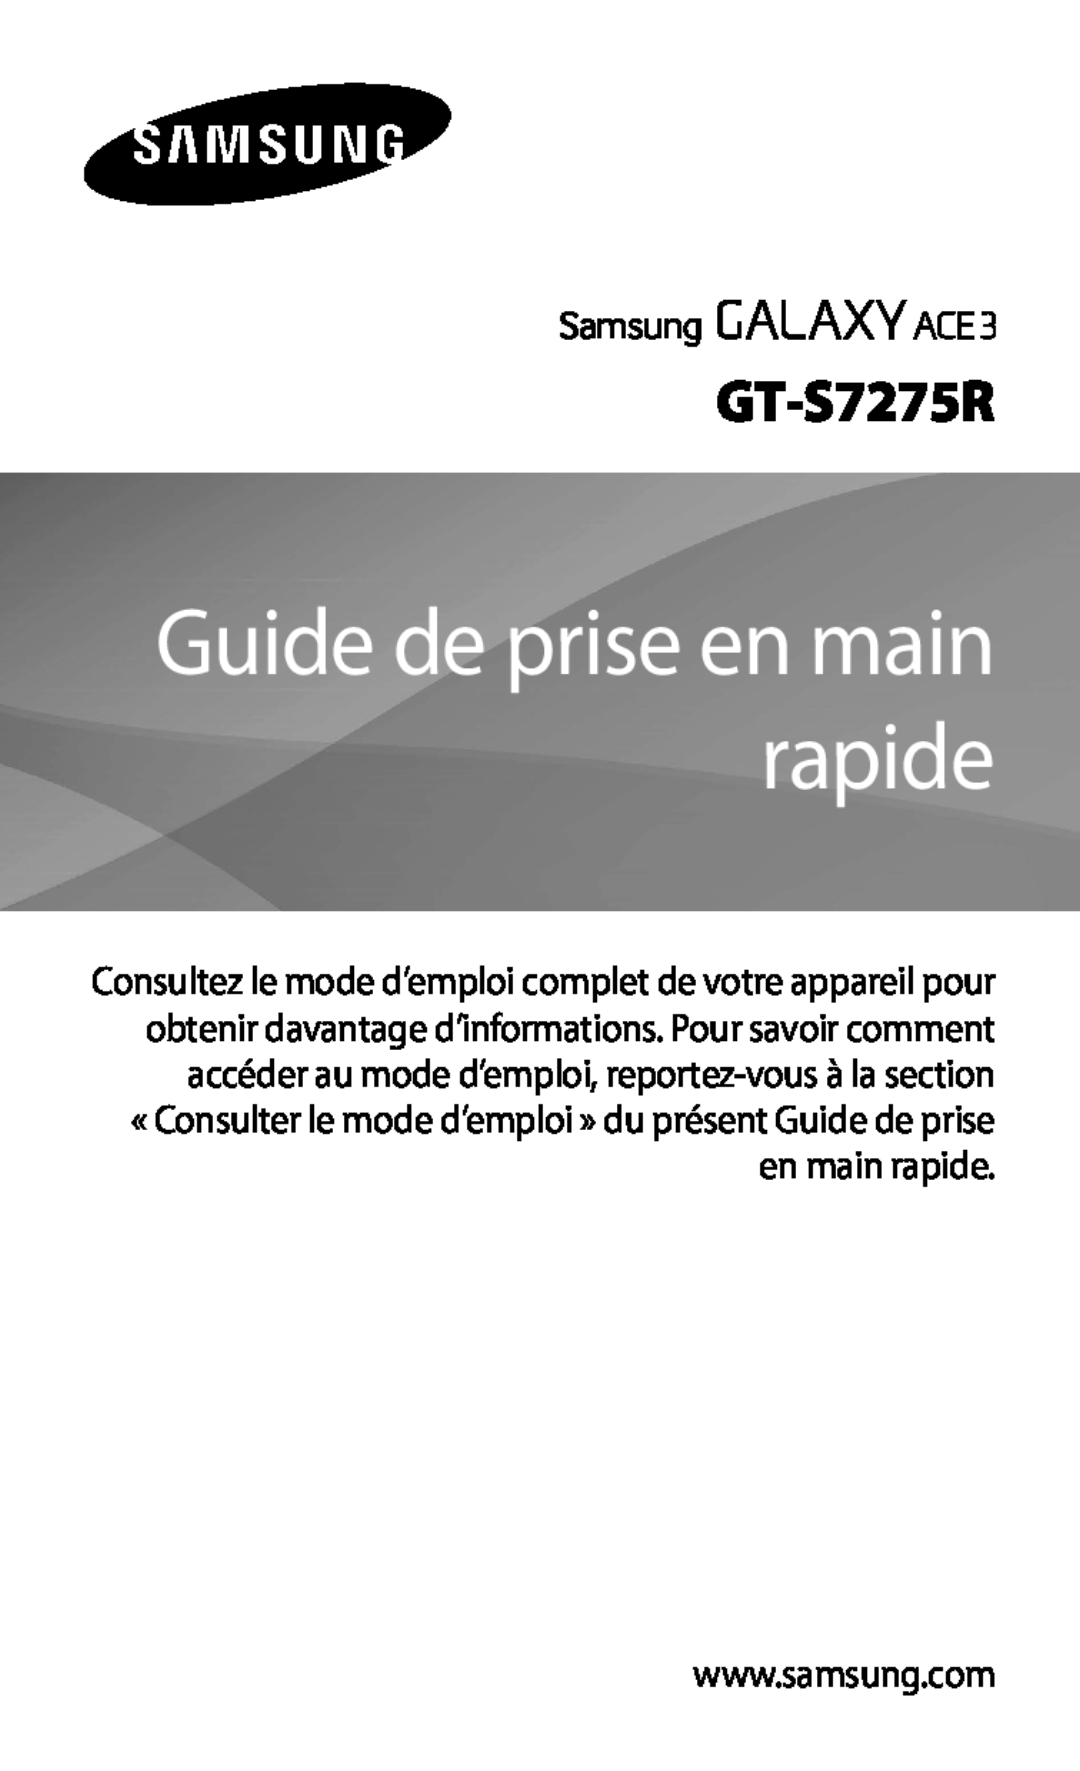 Samsung GT-S7275HKNFTM, GT-S7275HKNXEF, GT-S7275UWAXEF, GT-S7275HKAXEF manual Guide de prise en main rapide, GT-S7275R 